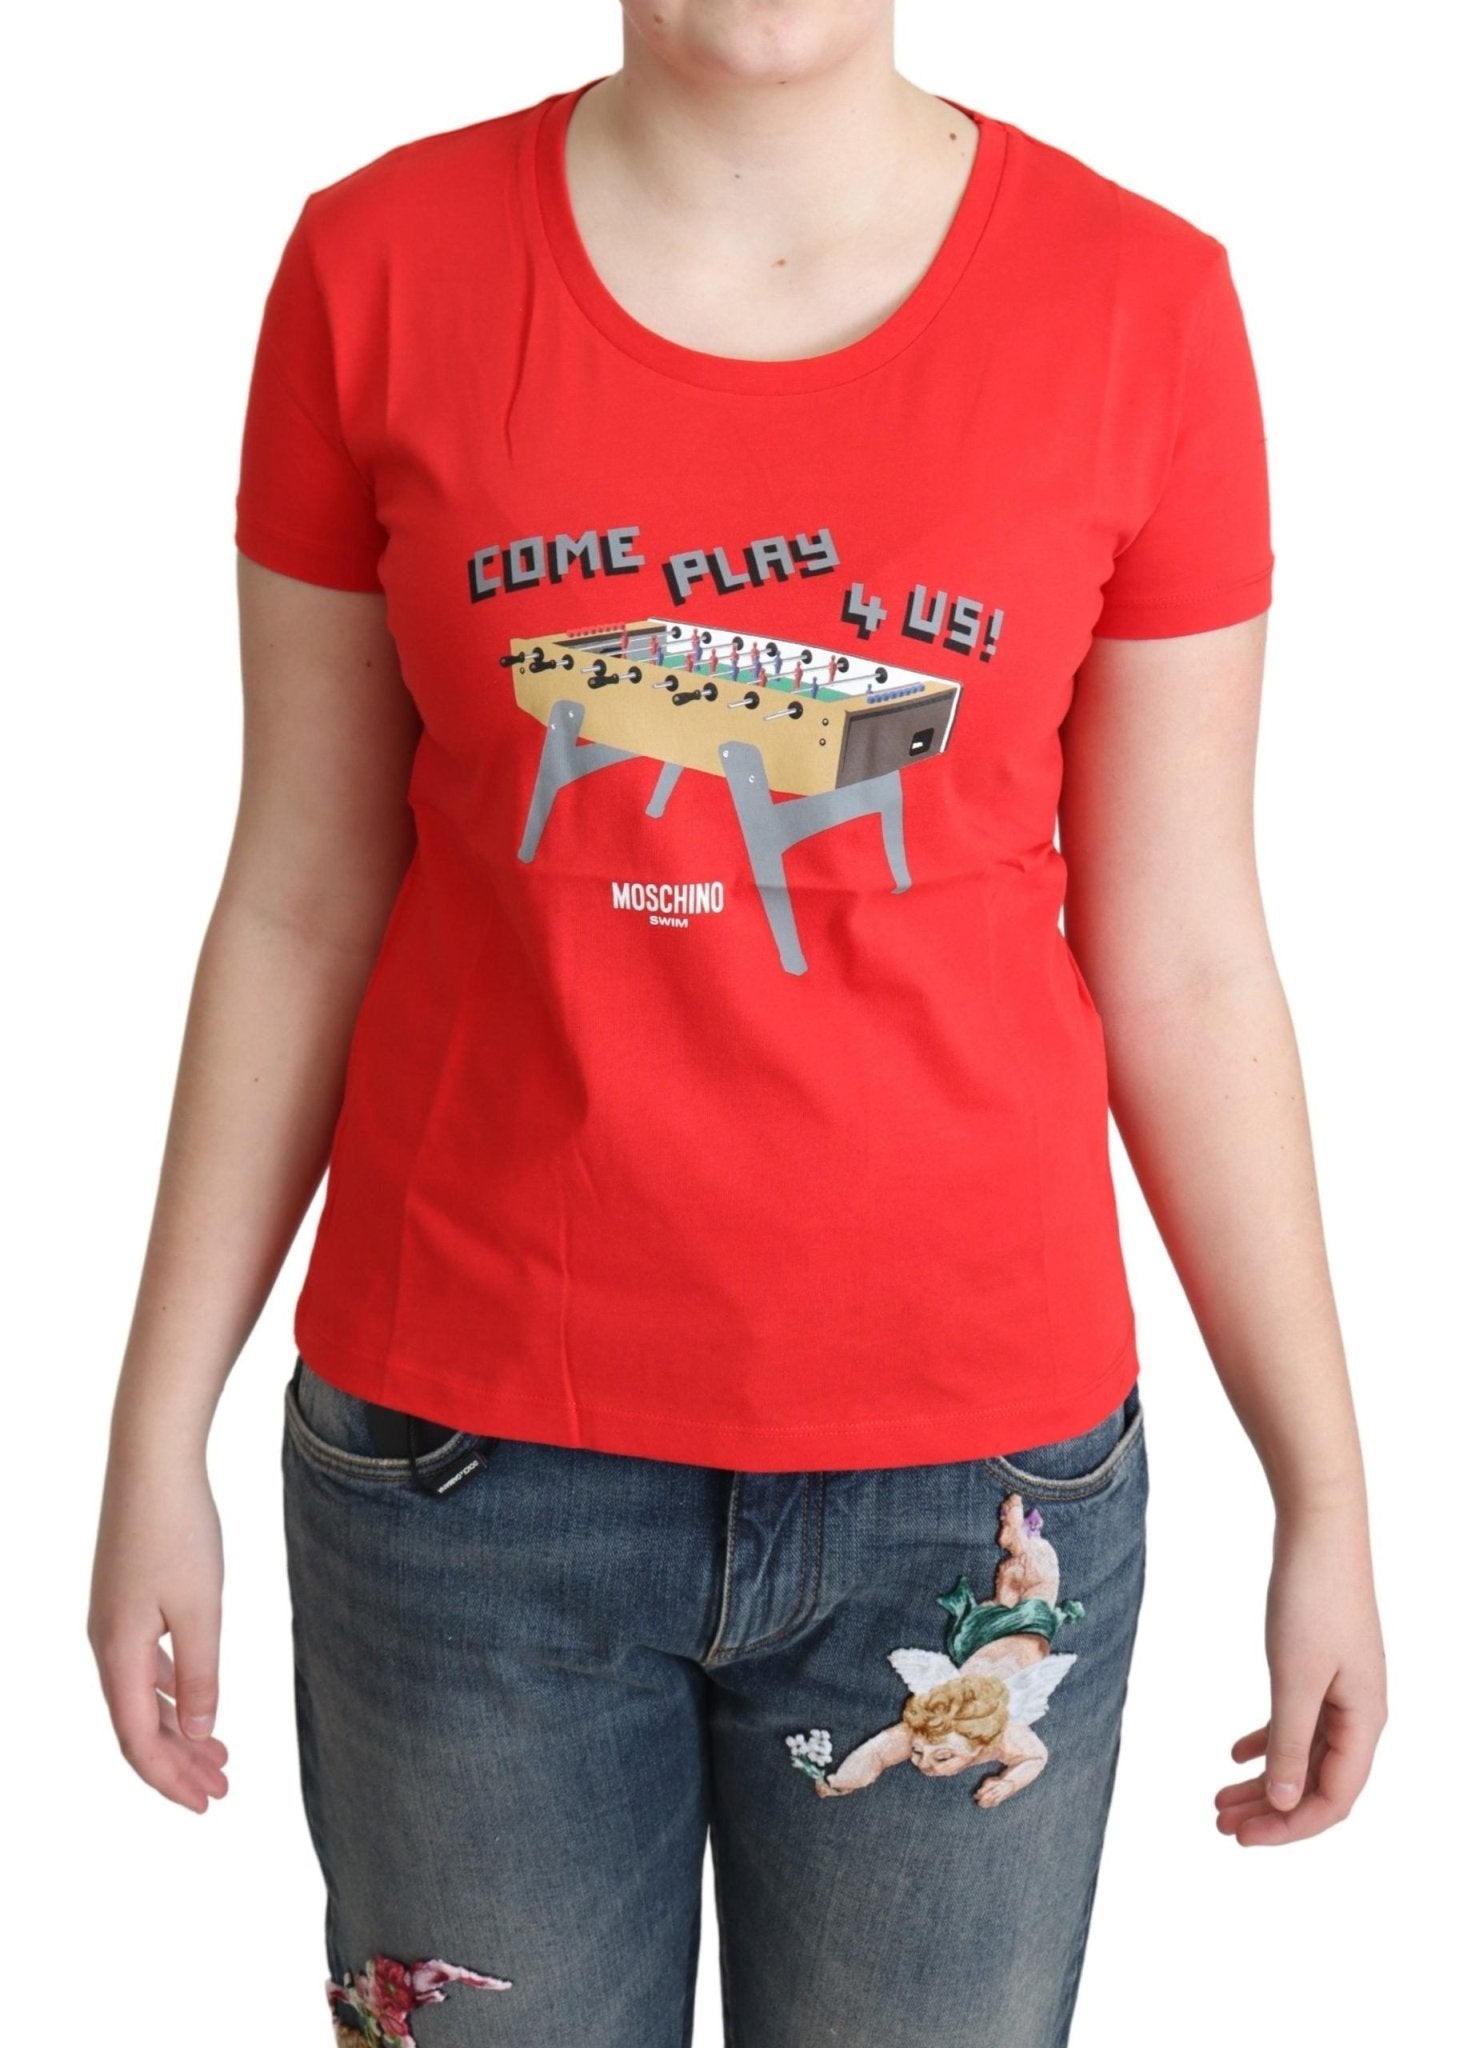 Moschino Red Cotton Come Play 4 Us Print Tops Blouse T-shirt - Fizigo